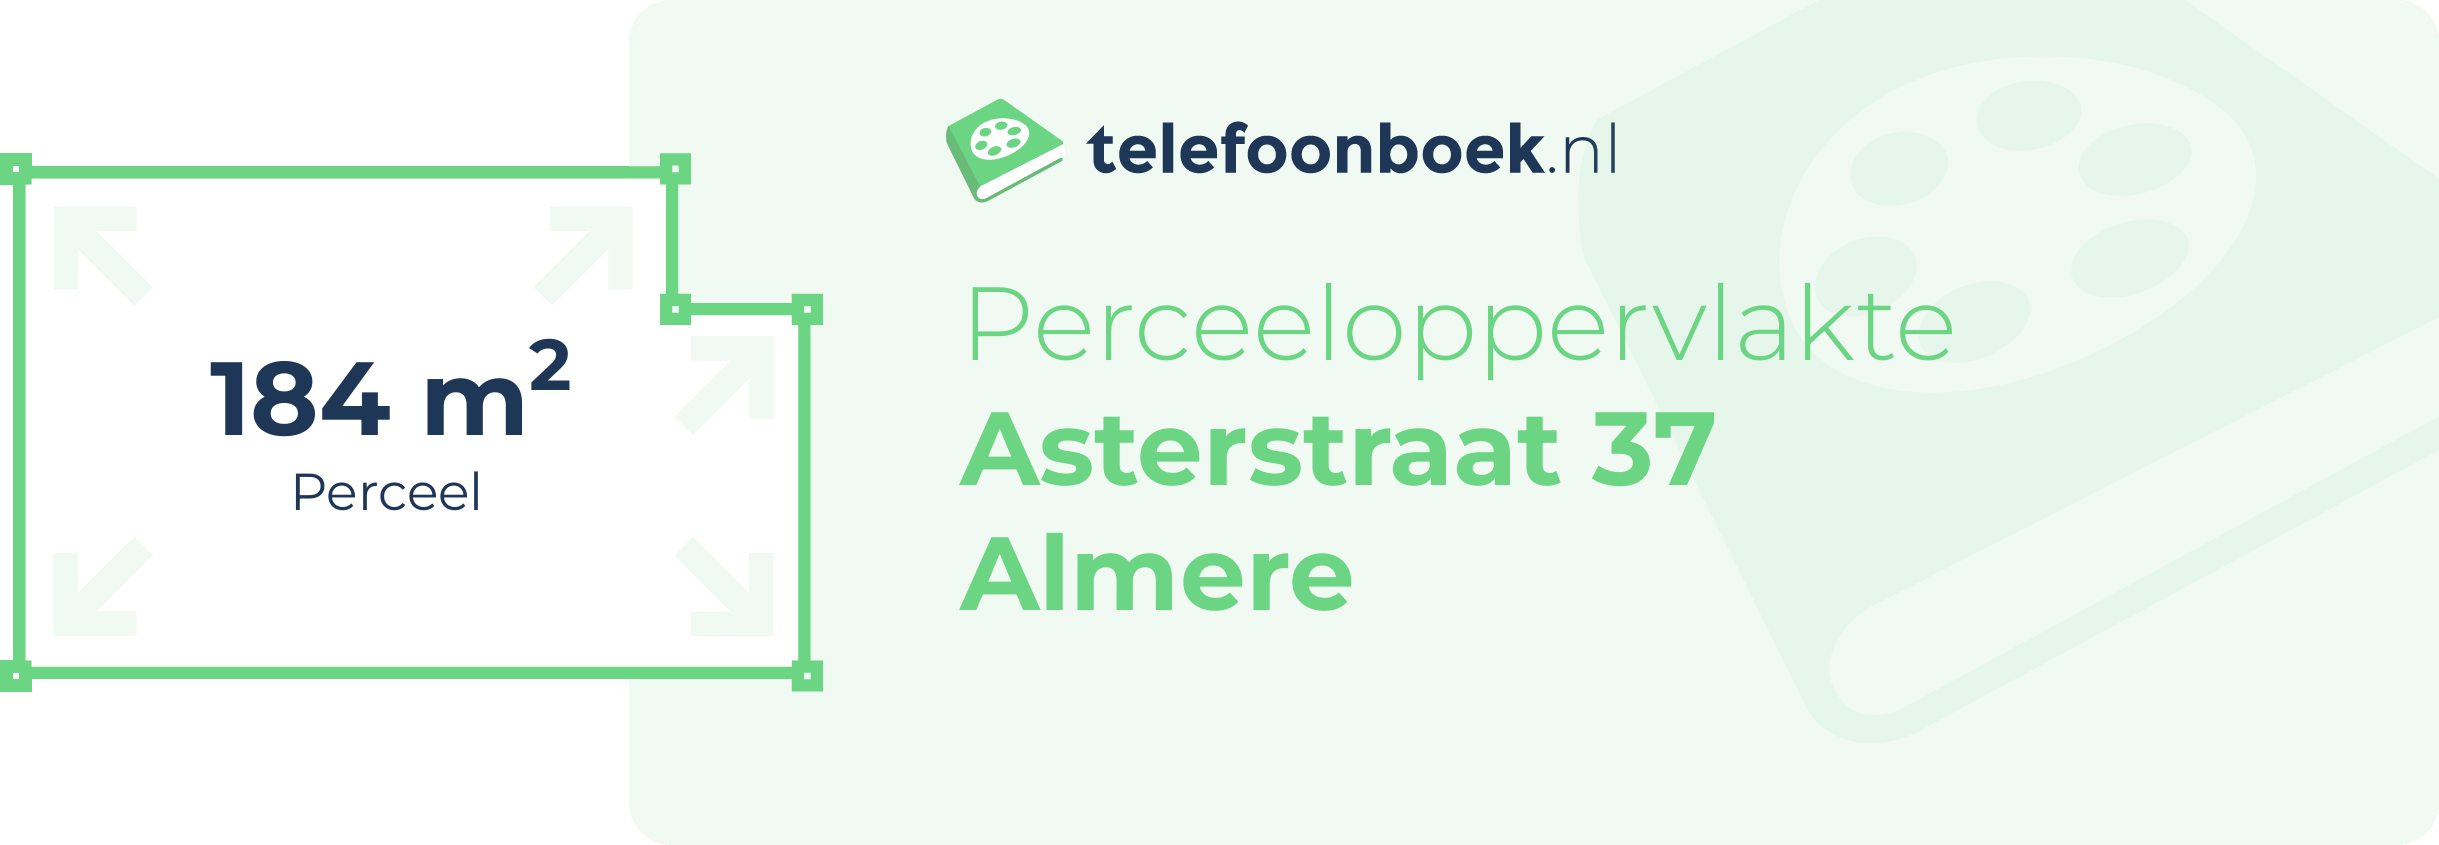 Perceeloppervlakte Asterstraat 37 Almere